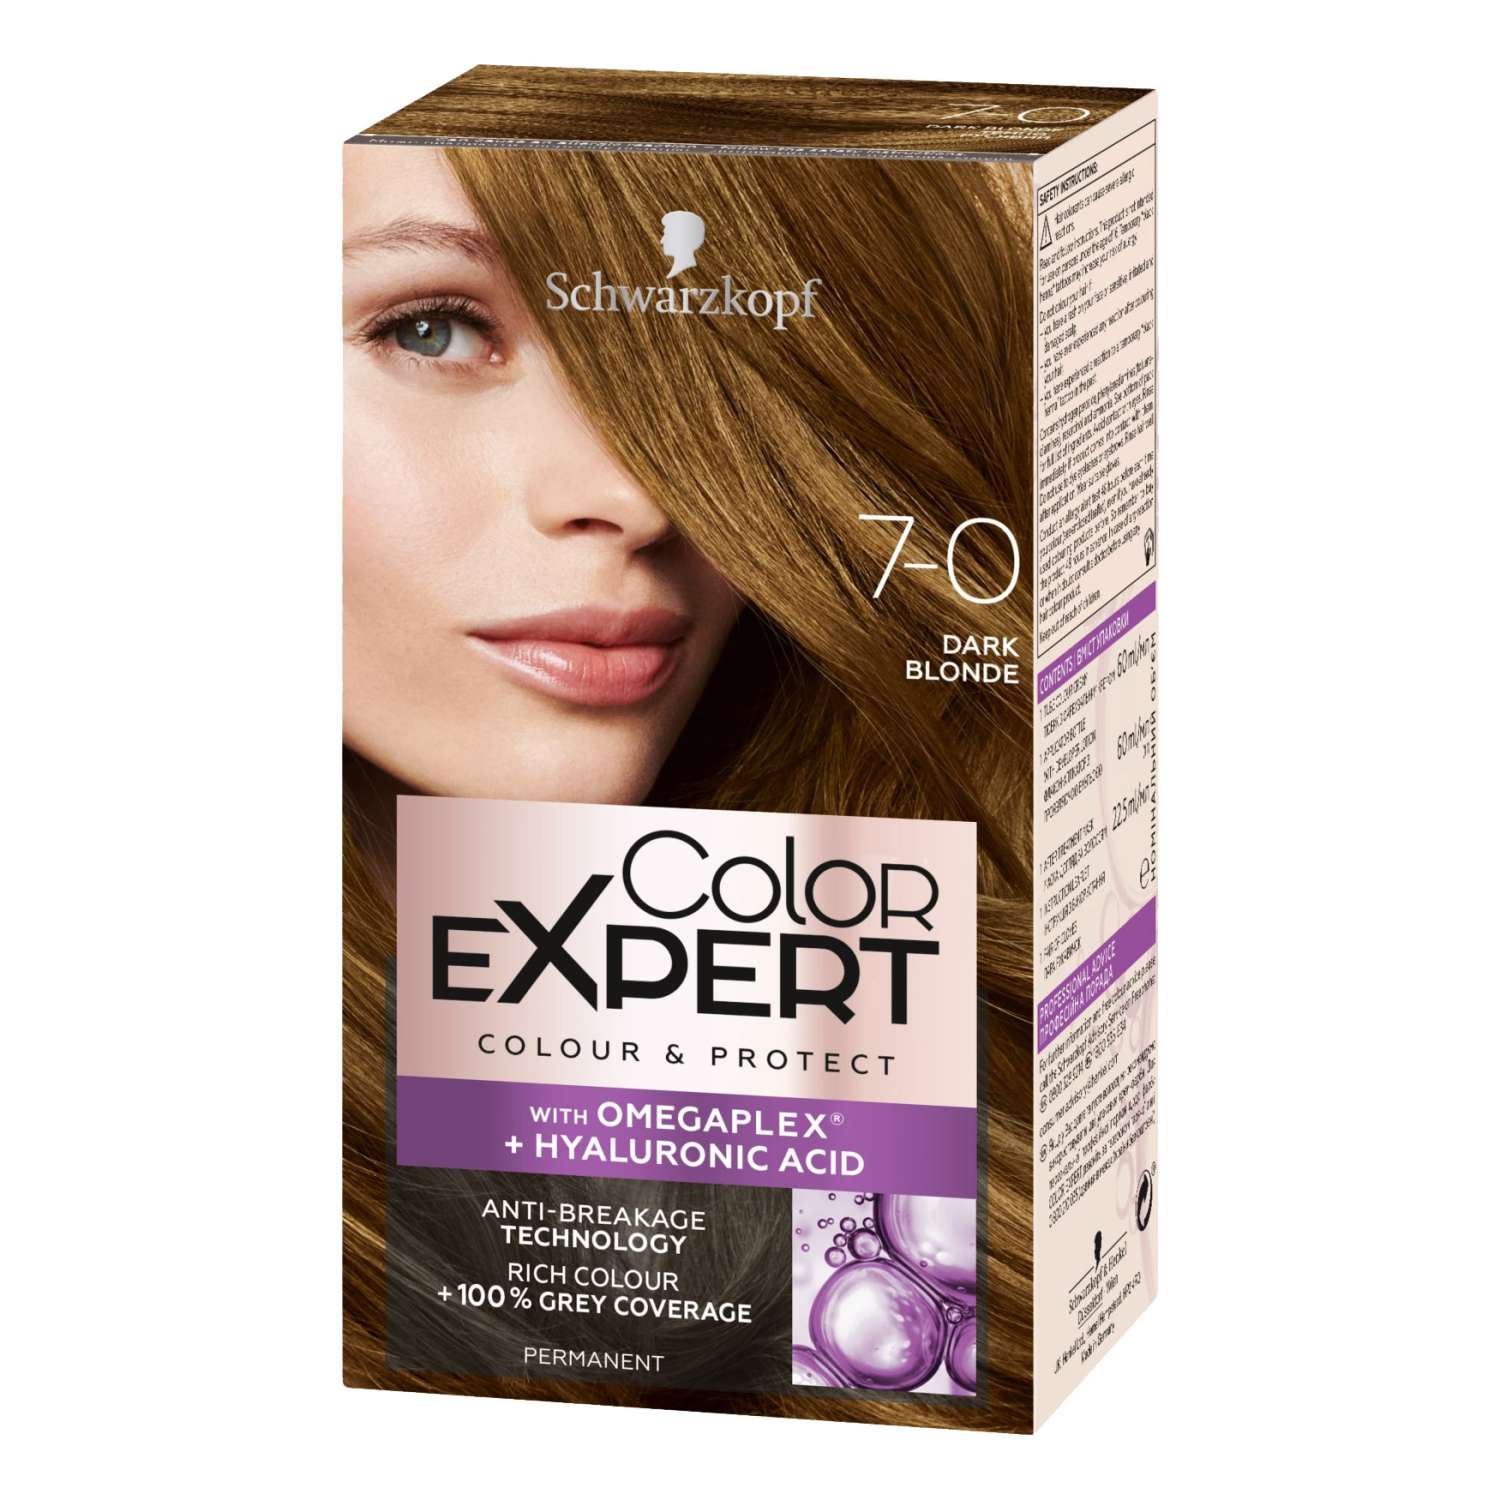 3 X Schwarzkopf Color Expert Hair Dyes - choose your colour | eBay